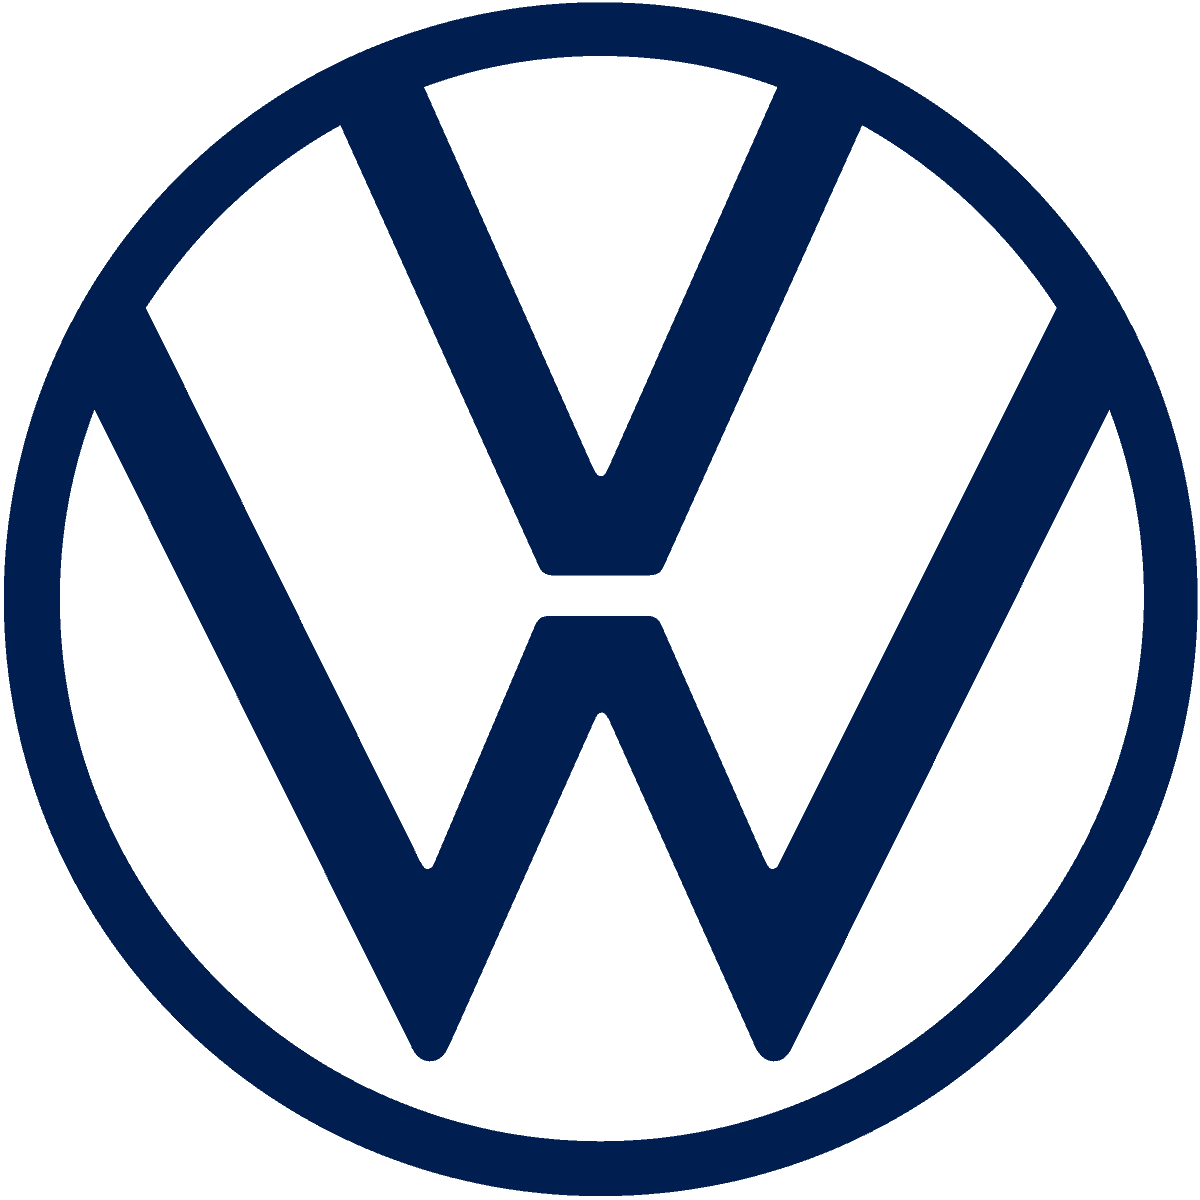 Volkswagen_logo_2019.svg